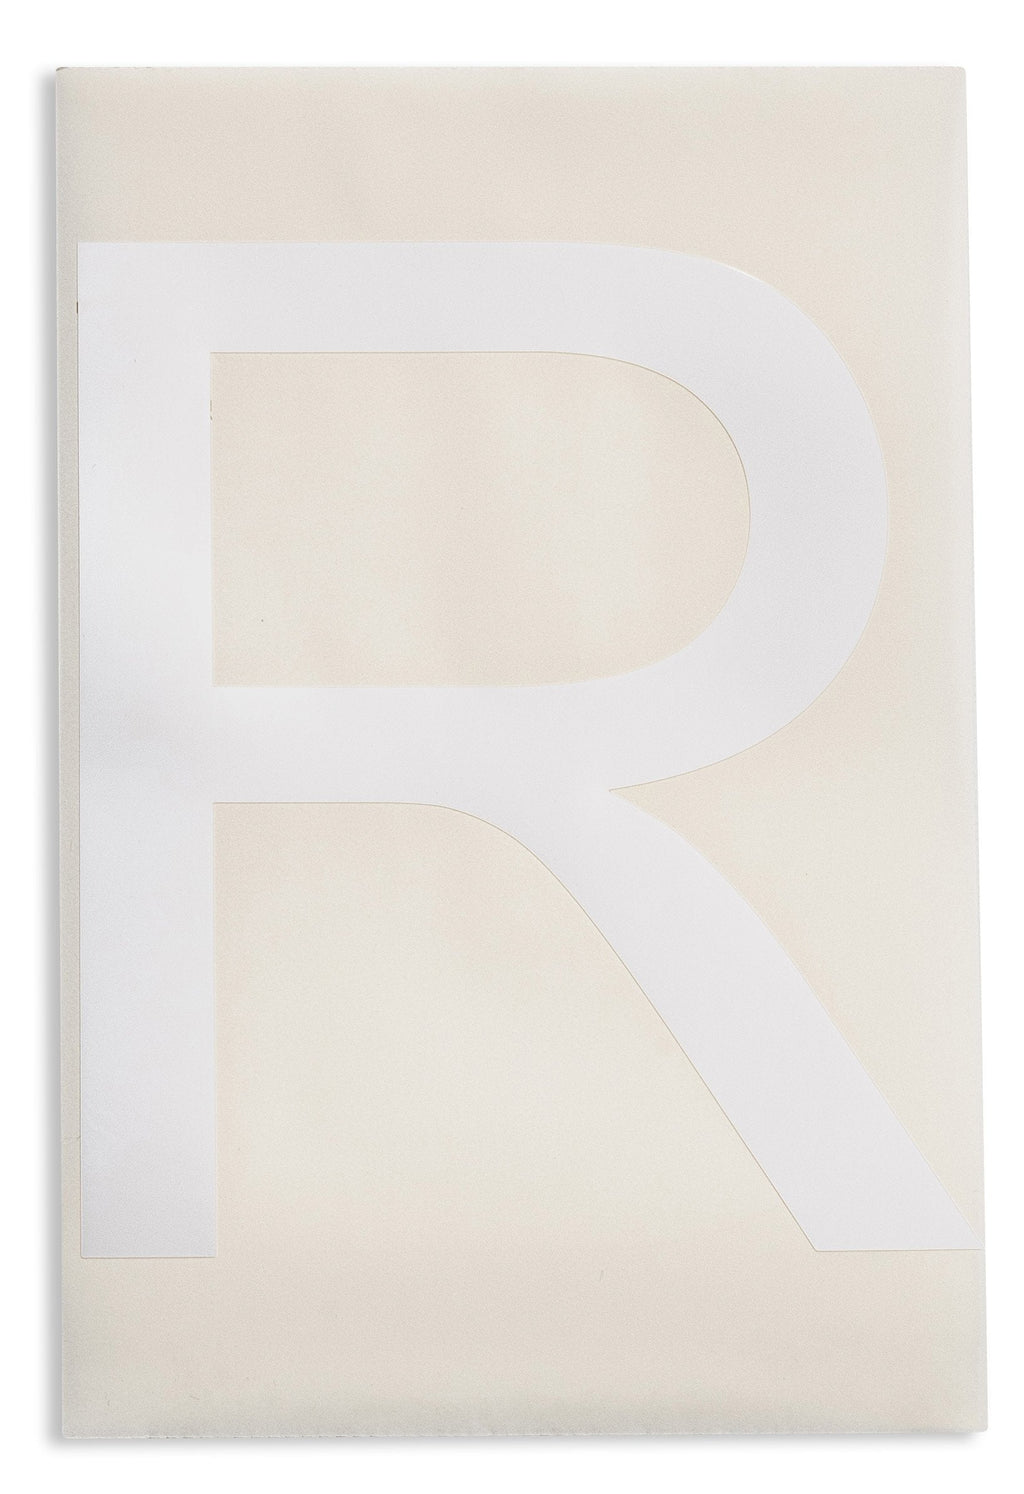  [AUSTRALIA] - Brady 121794 ToughStripe Die-Cut Polyester Tape, White Letter"R"(Pack of 20)